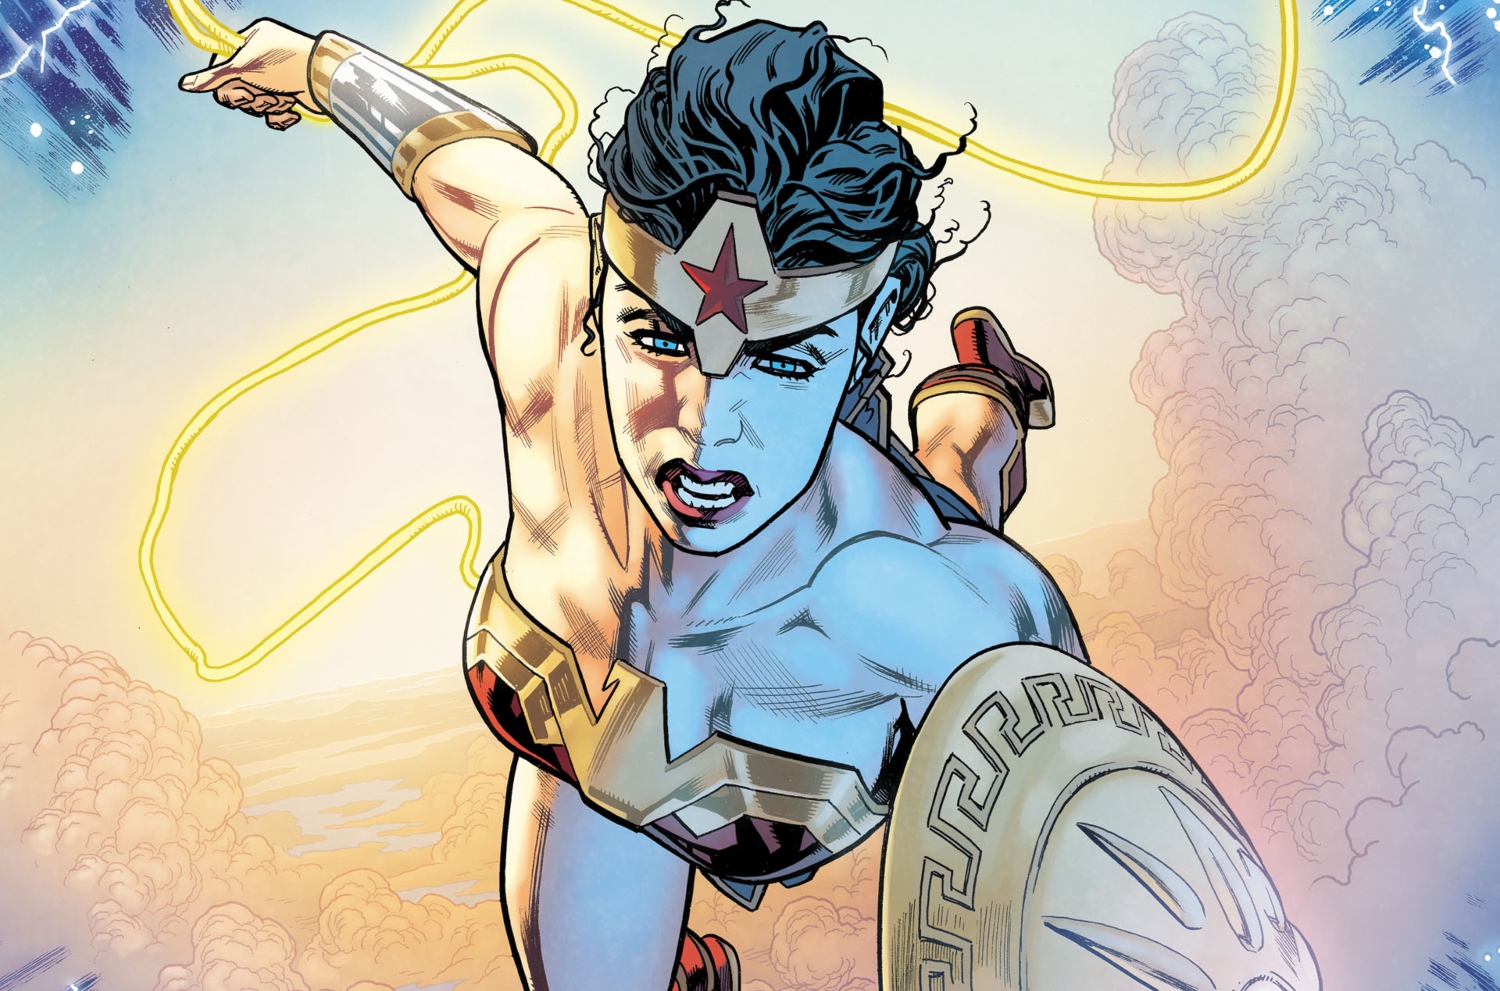 Stephanie Phillips, Mike Hawthorne talk growth and heroism in 'Wonder Woman: Evolution'